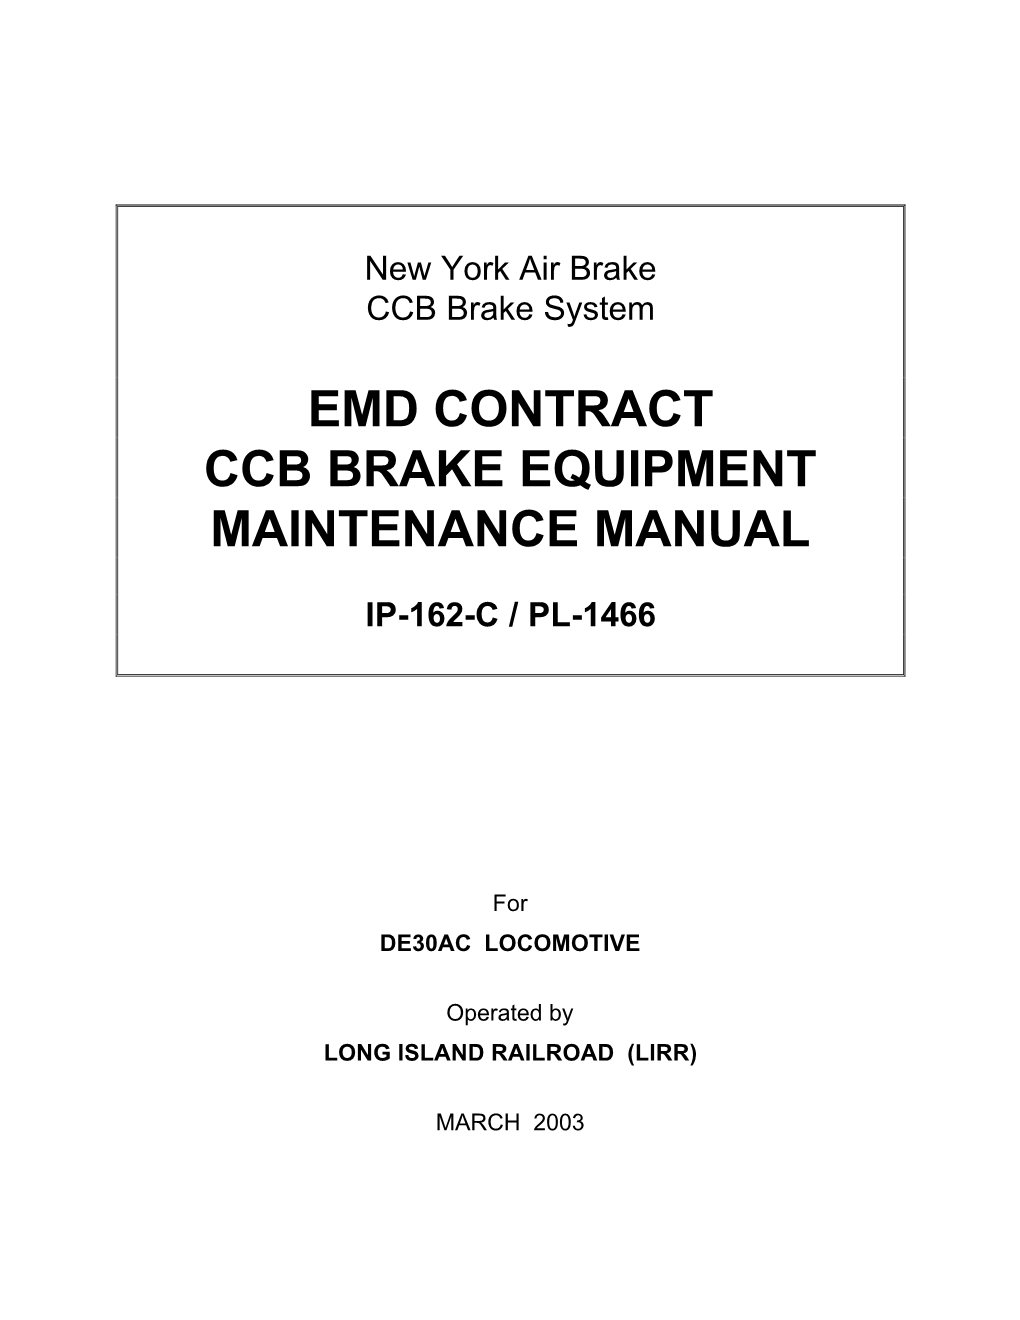 Emd Contract Ccb Brake Equipment Maintenance Manual